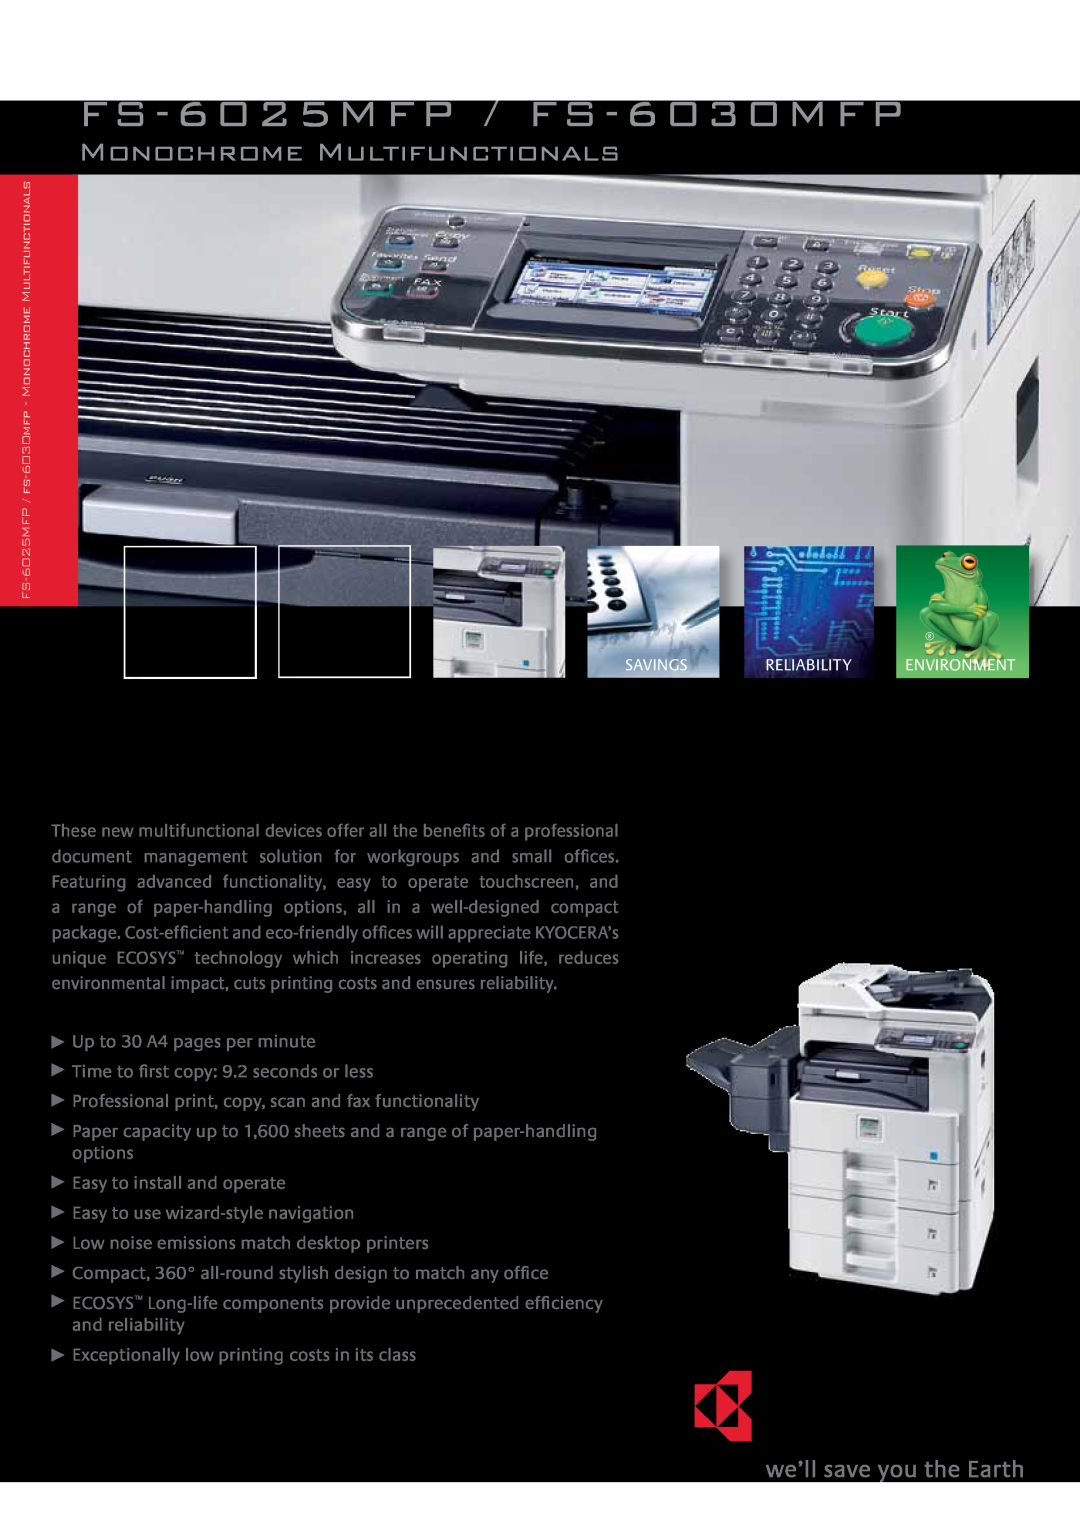 Kyocera manual FS-6025MFP / FS-6030MFP, Monochrome Multifunctionals 